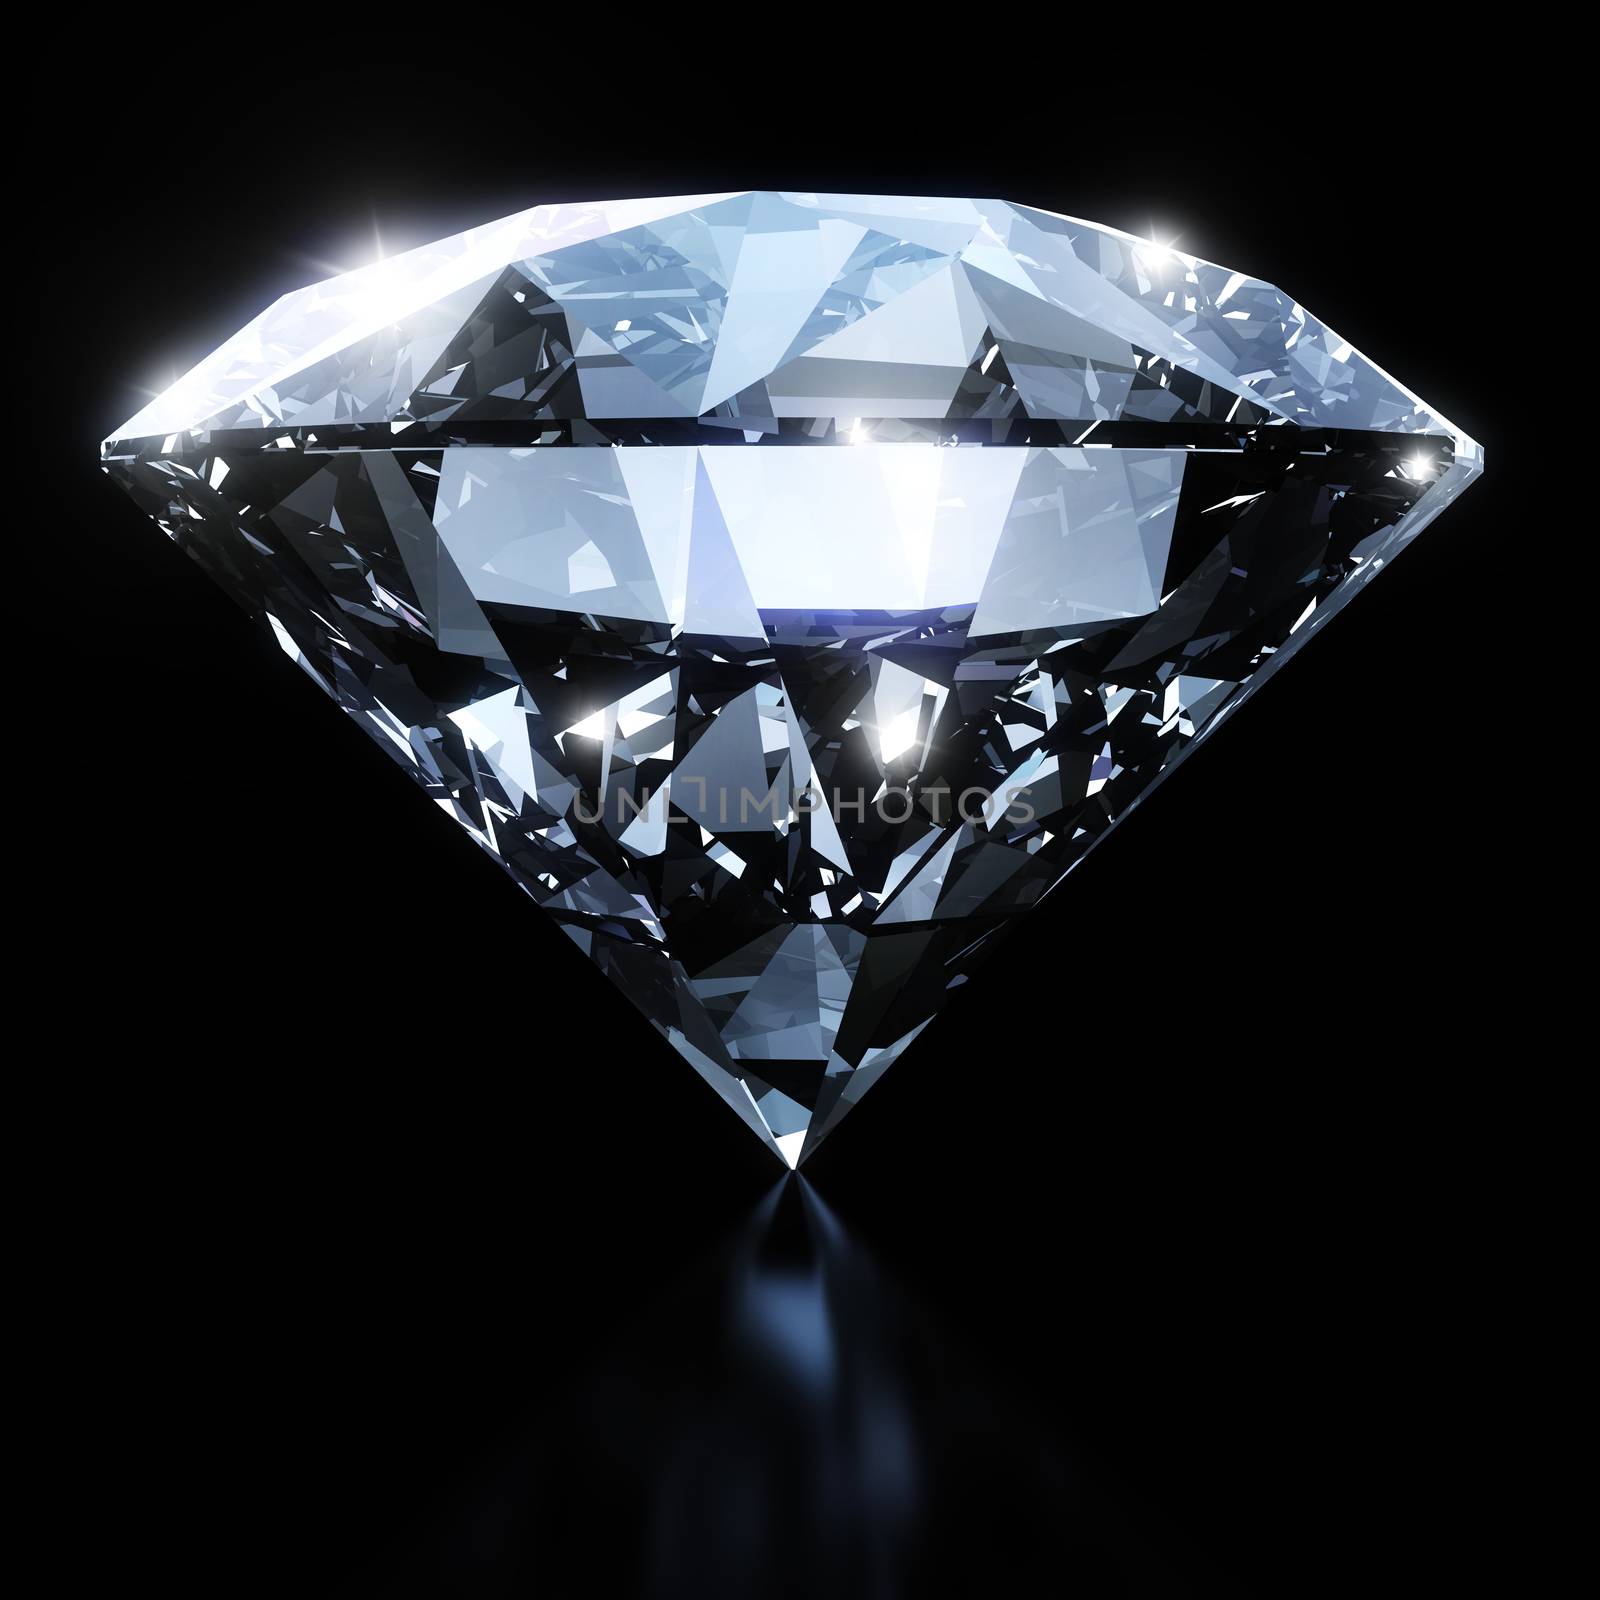 Luxury Diamond by 123dartist